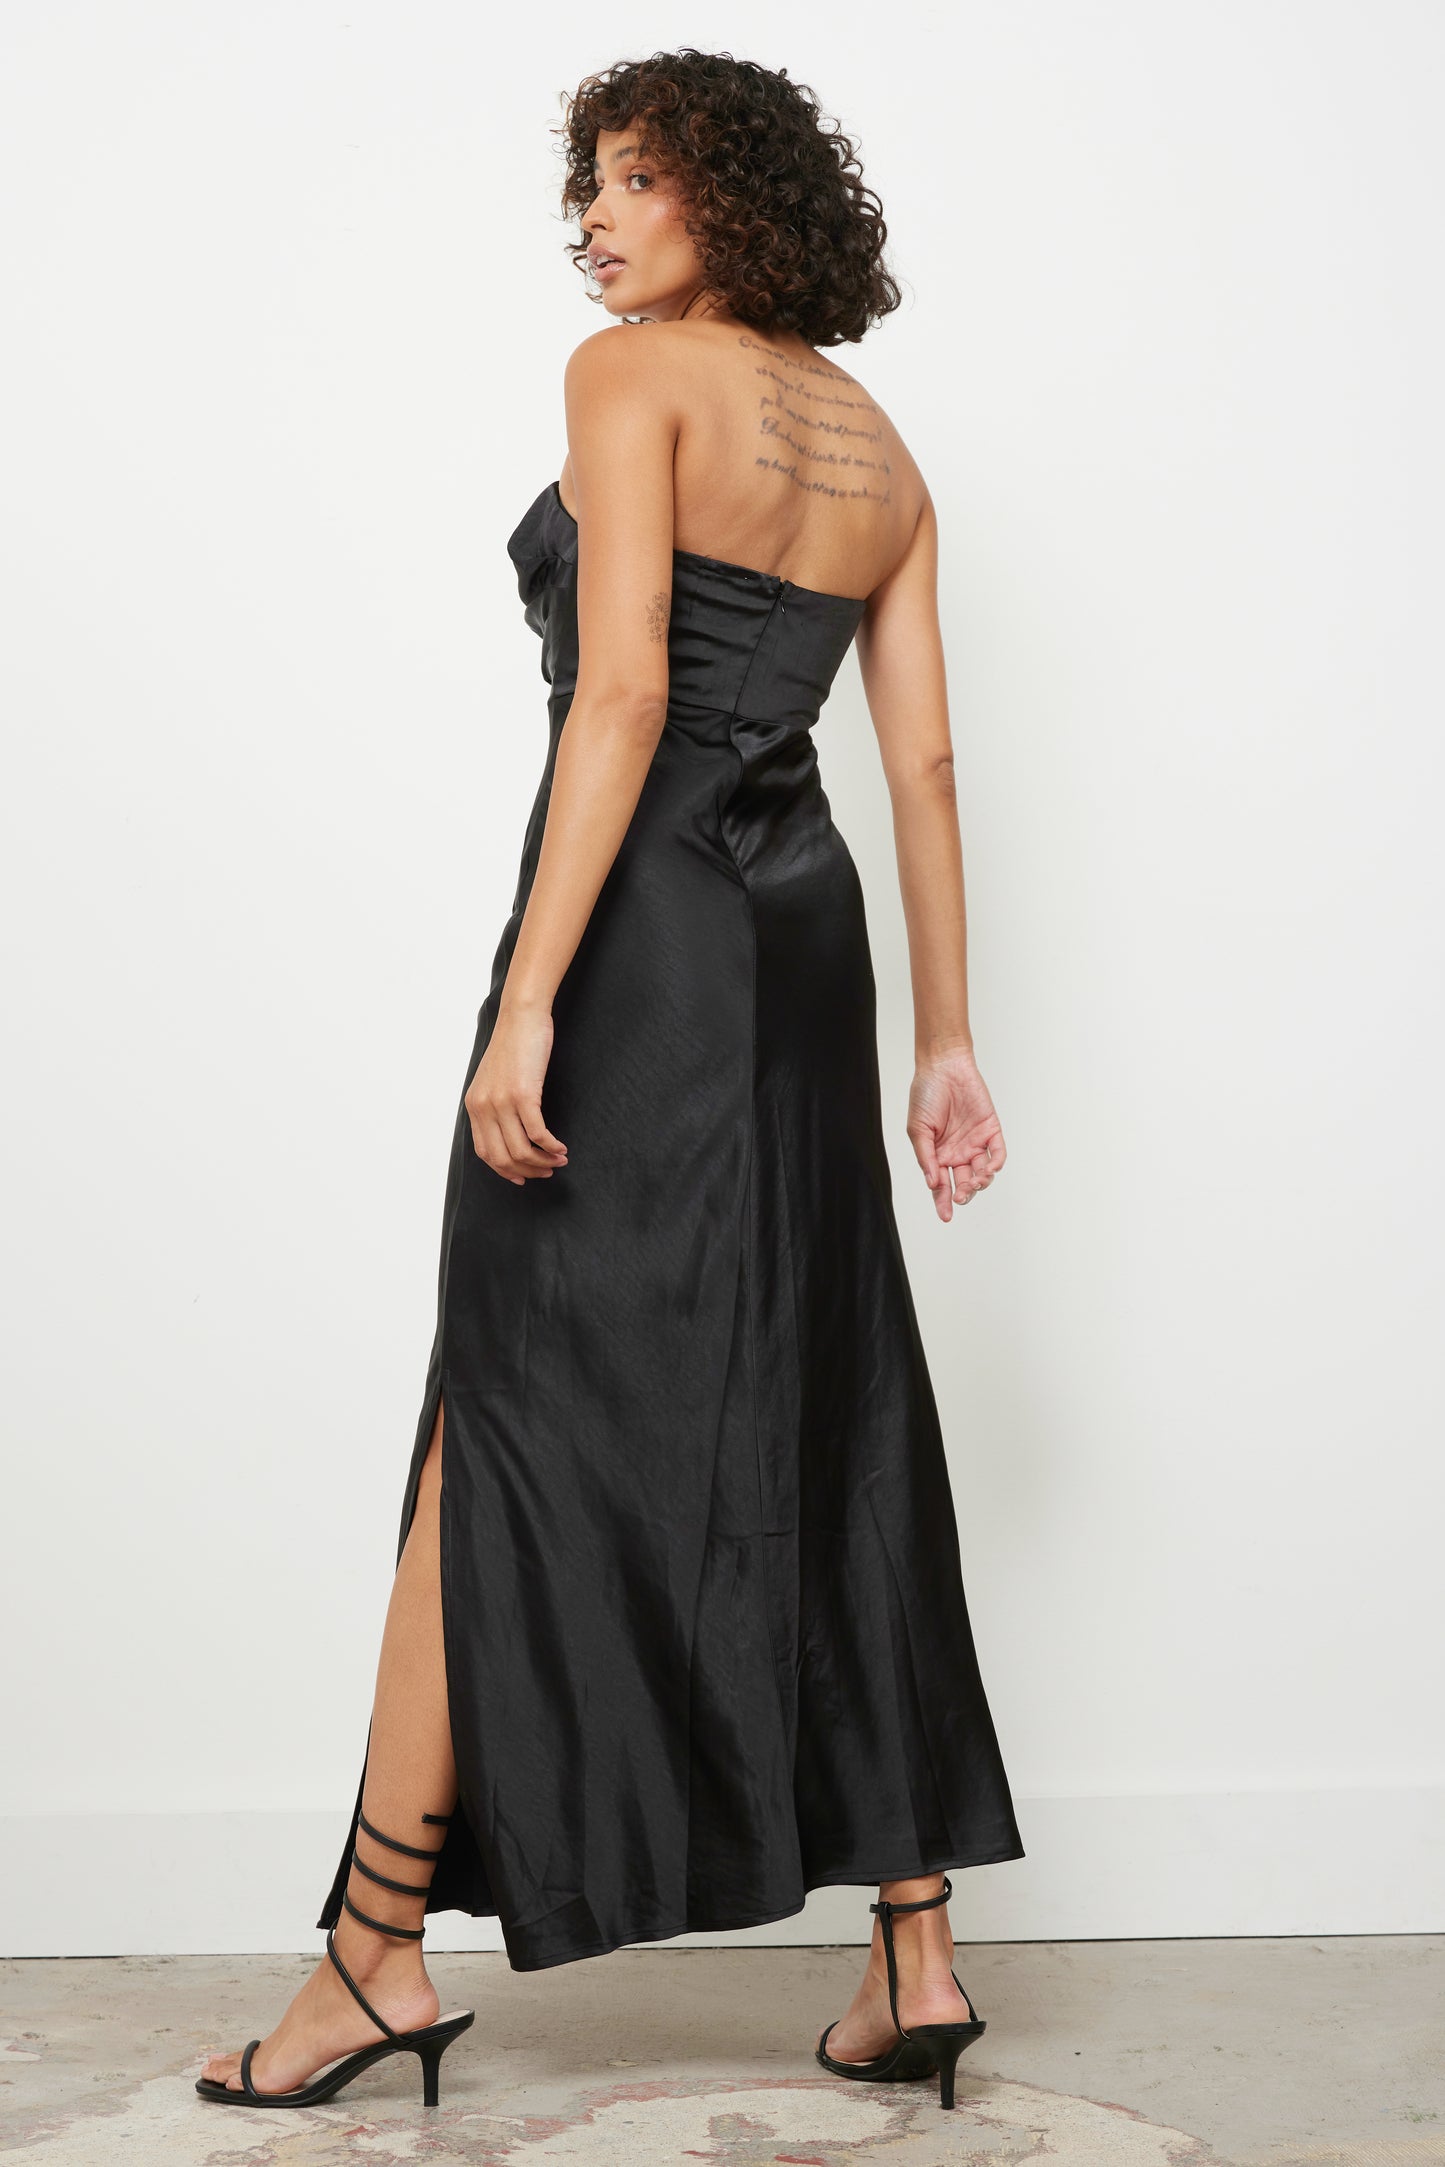 Super Sleek Black Dress